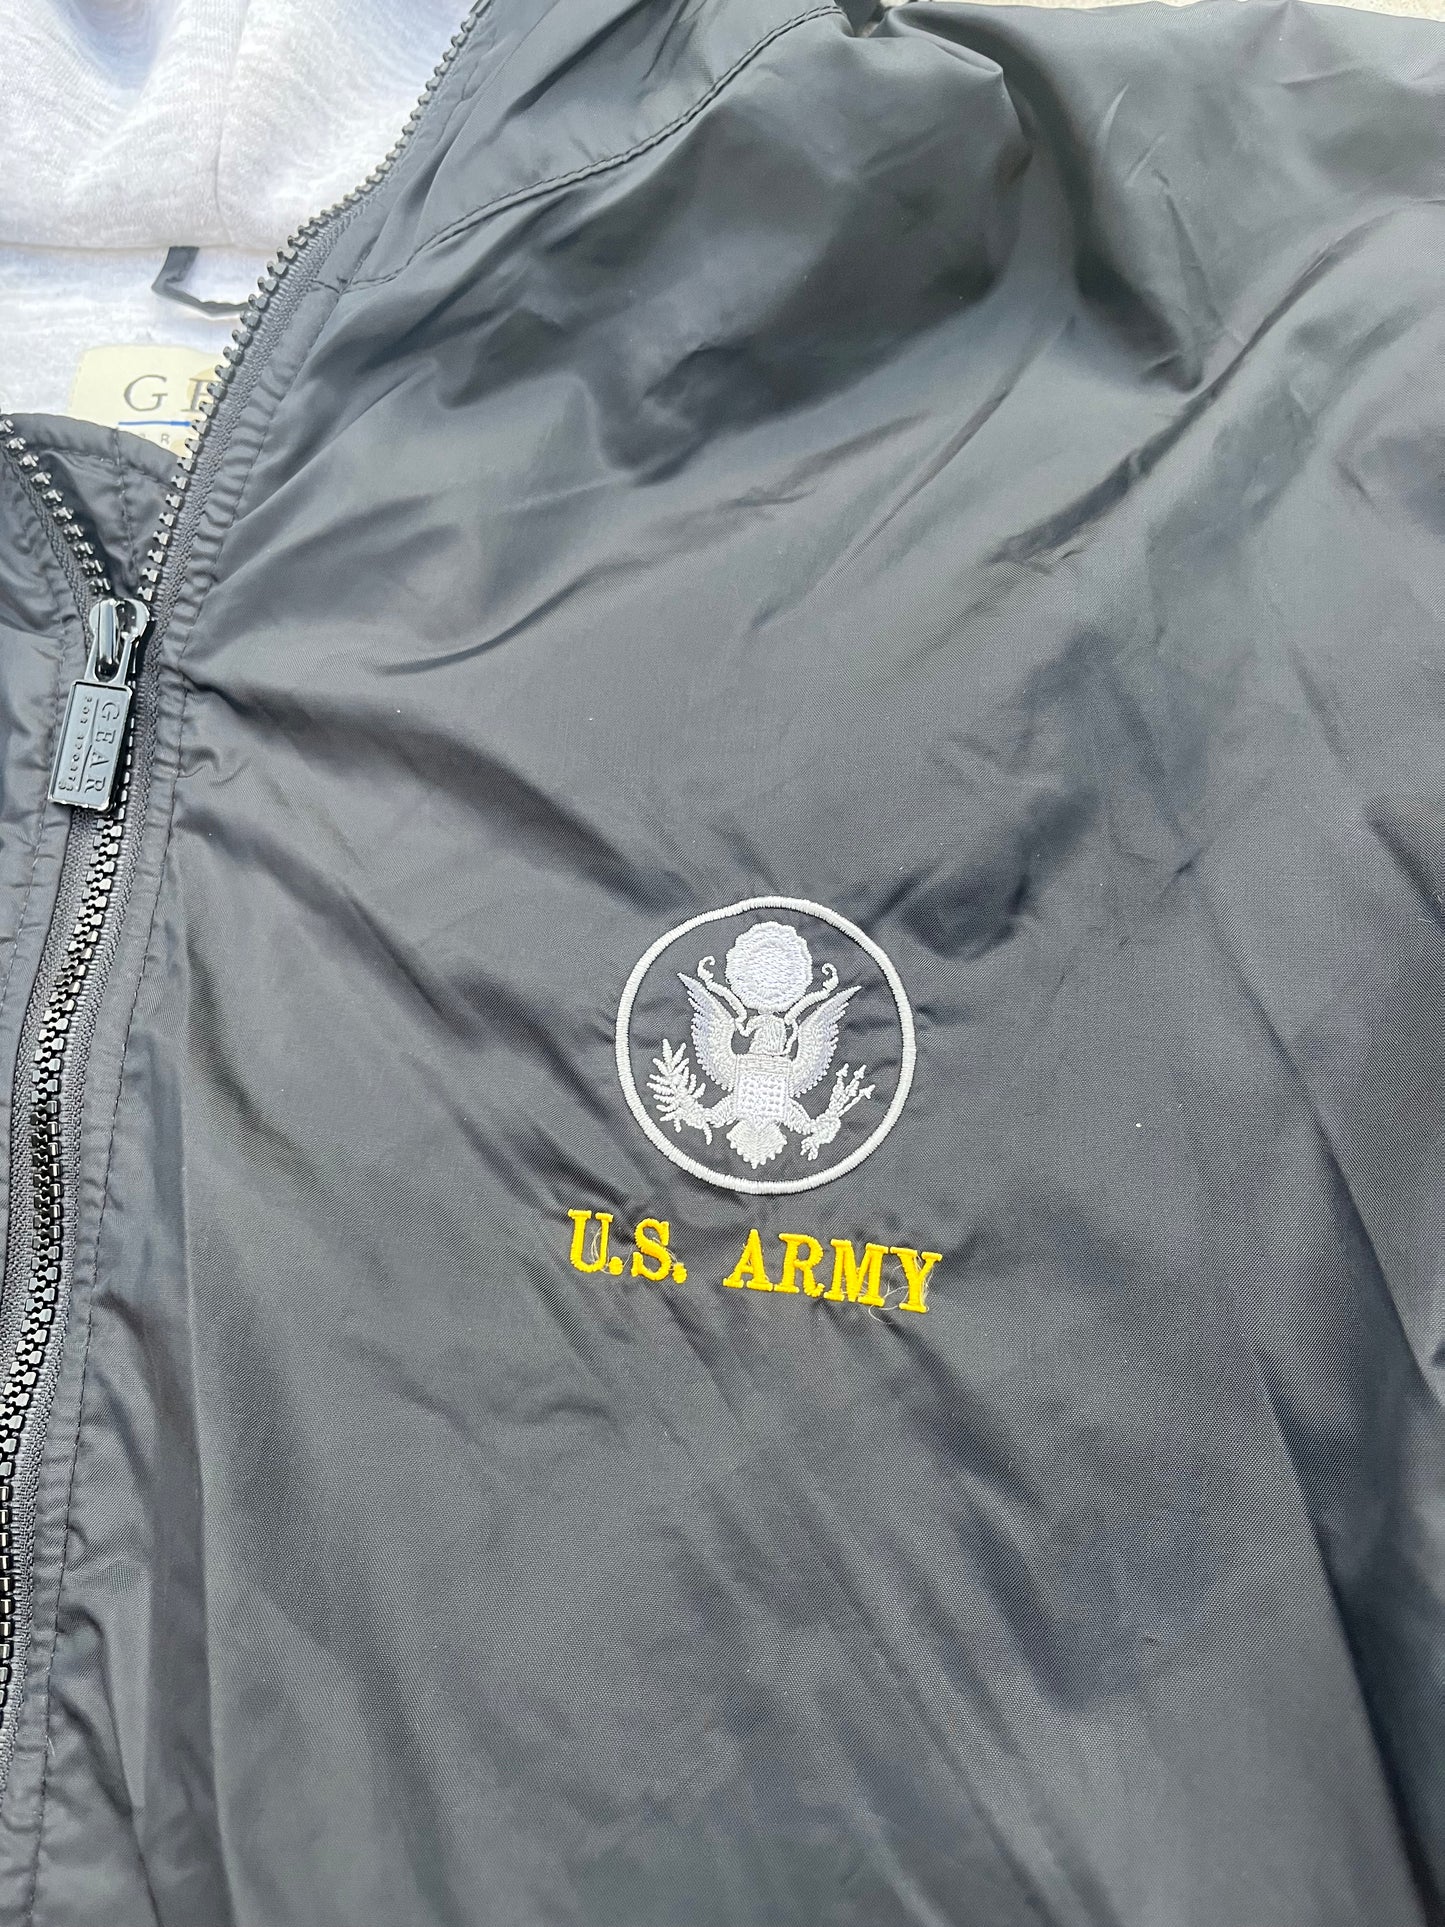 Army jacket